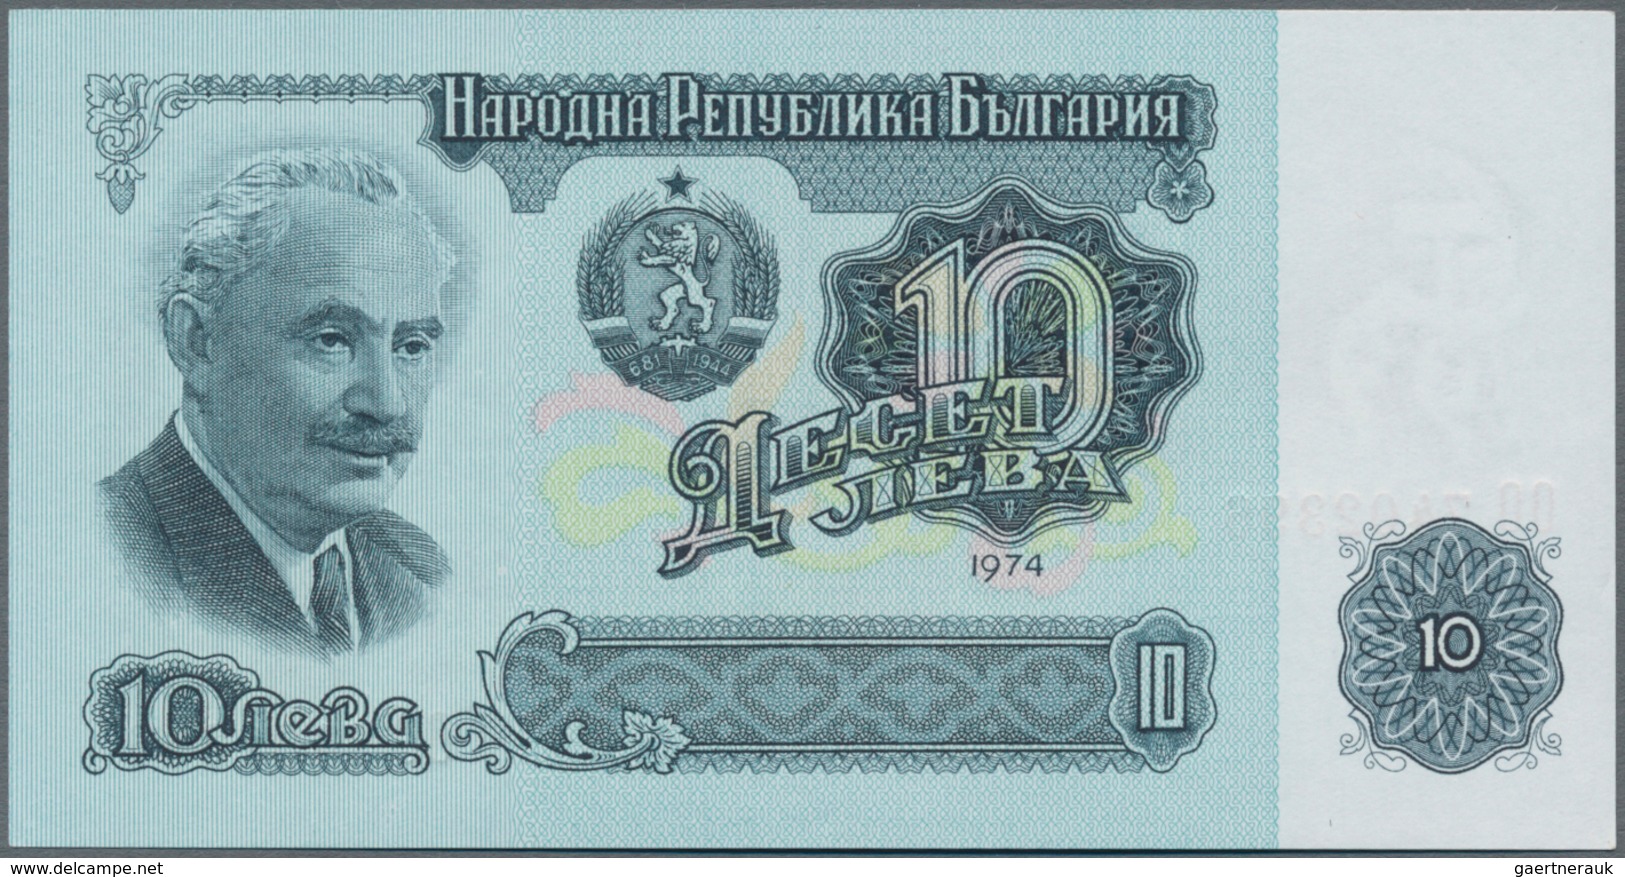 Bulgaria / Bulgarien: Set with 11 banknotes series 1962 – 1990, containing 1-20 Leva 1962 P.88-92 (U